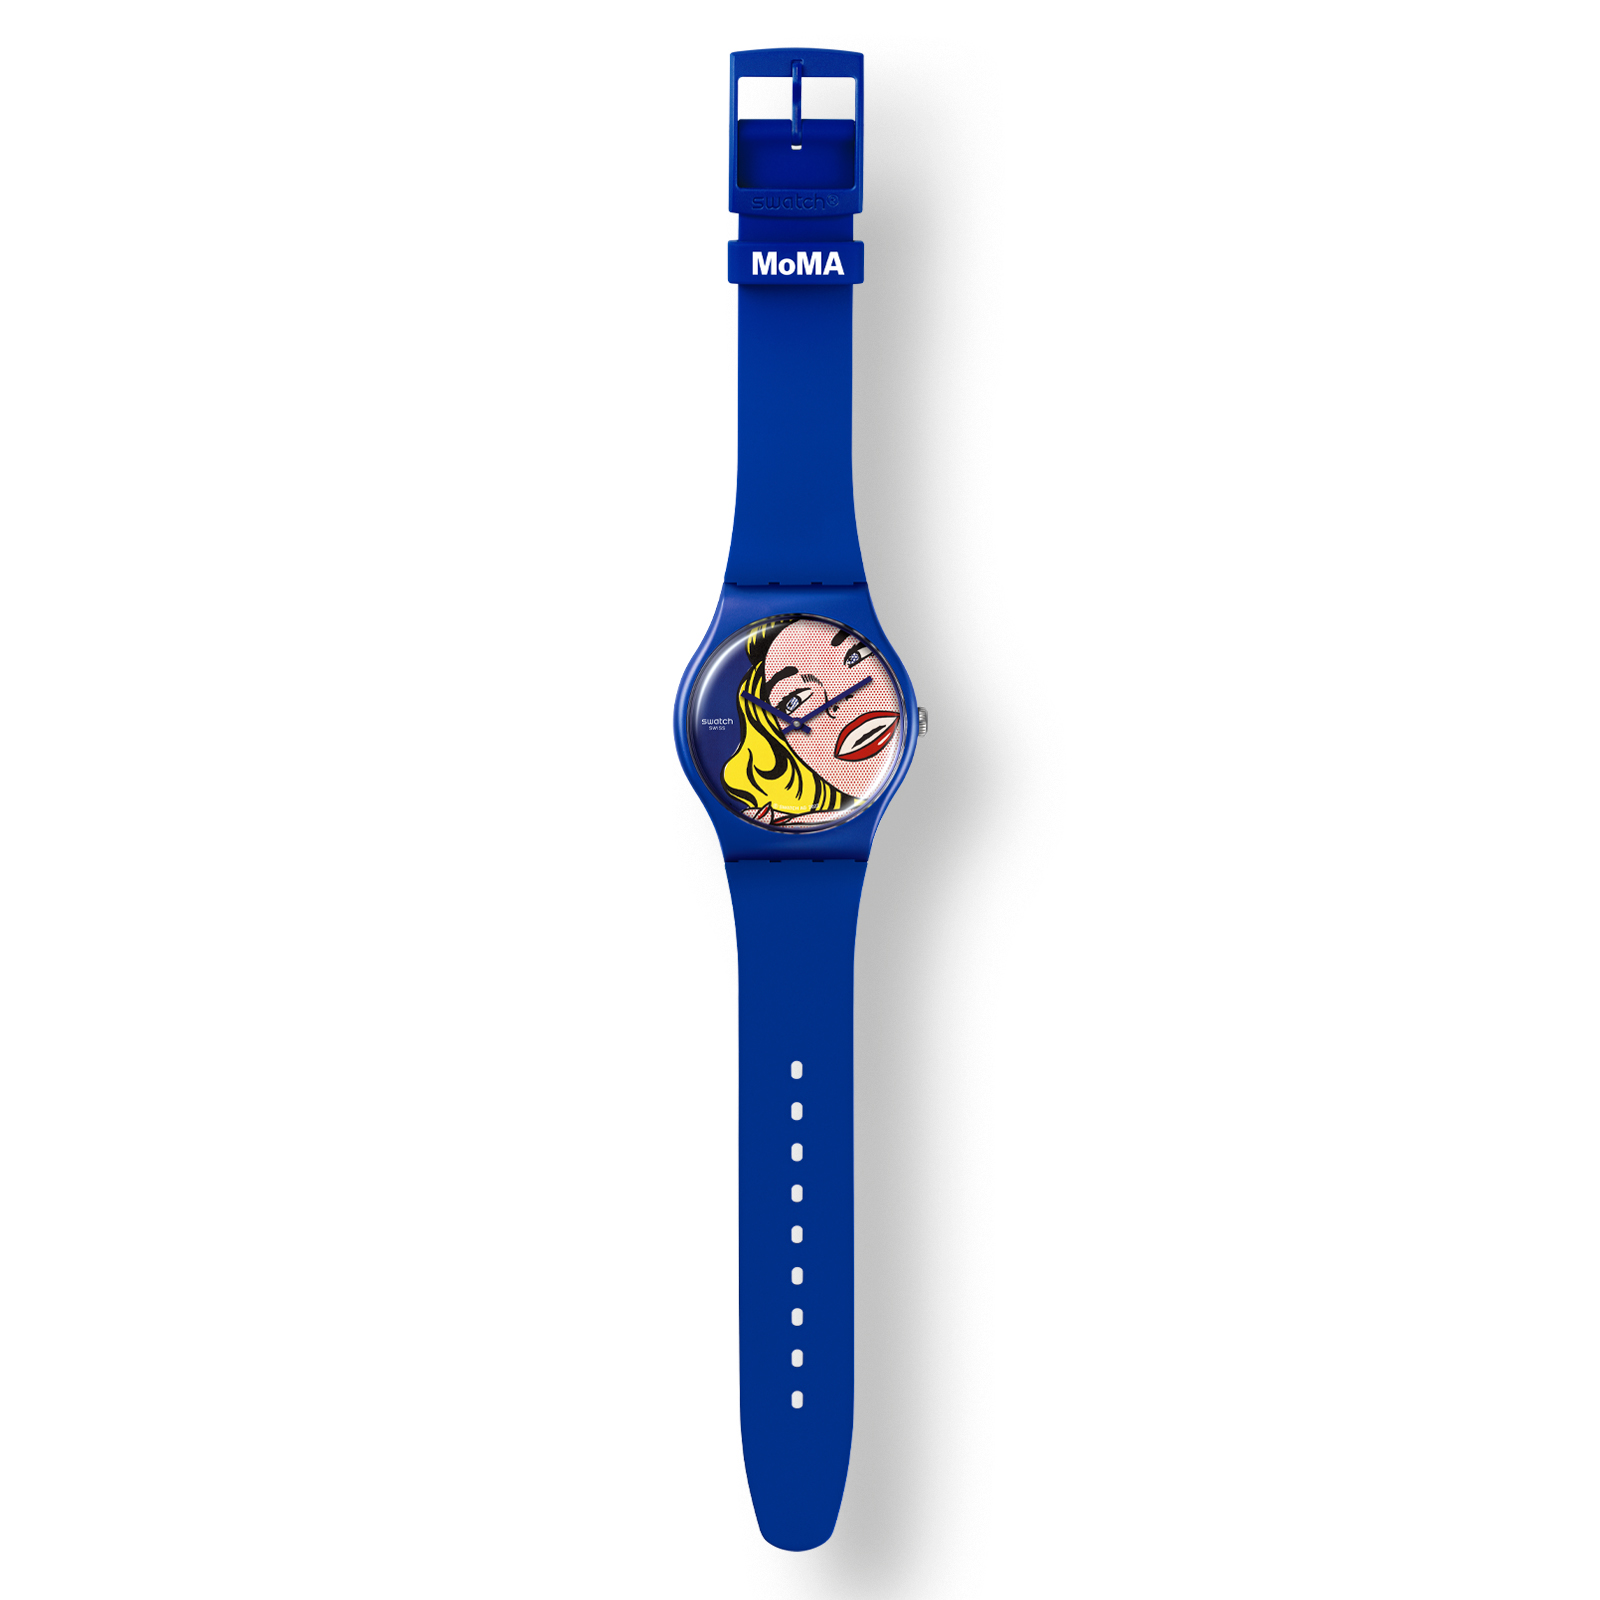 Reloj SWATCH GIRL BY ROY LICHTENSTEIN, THE WATCH SUOZ352 Azul